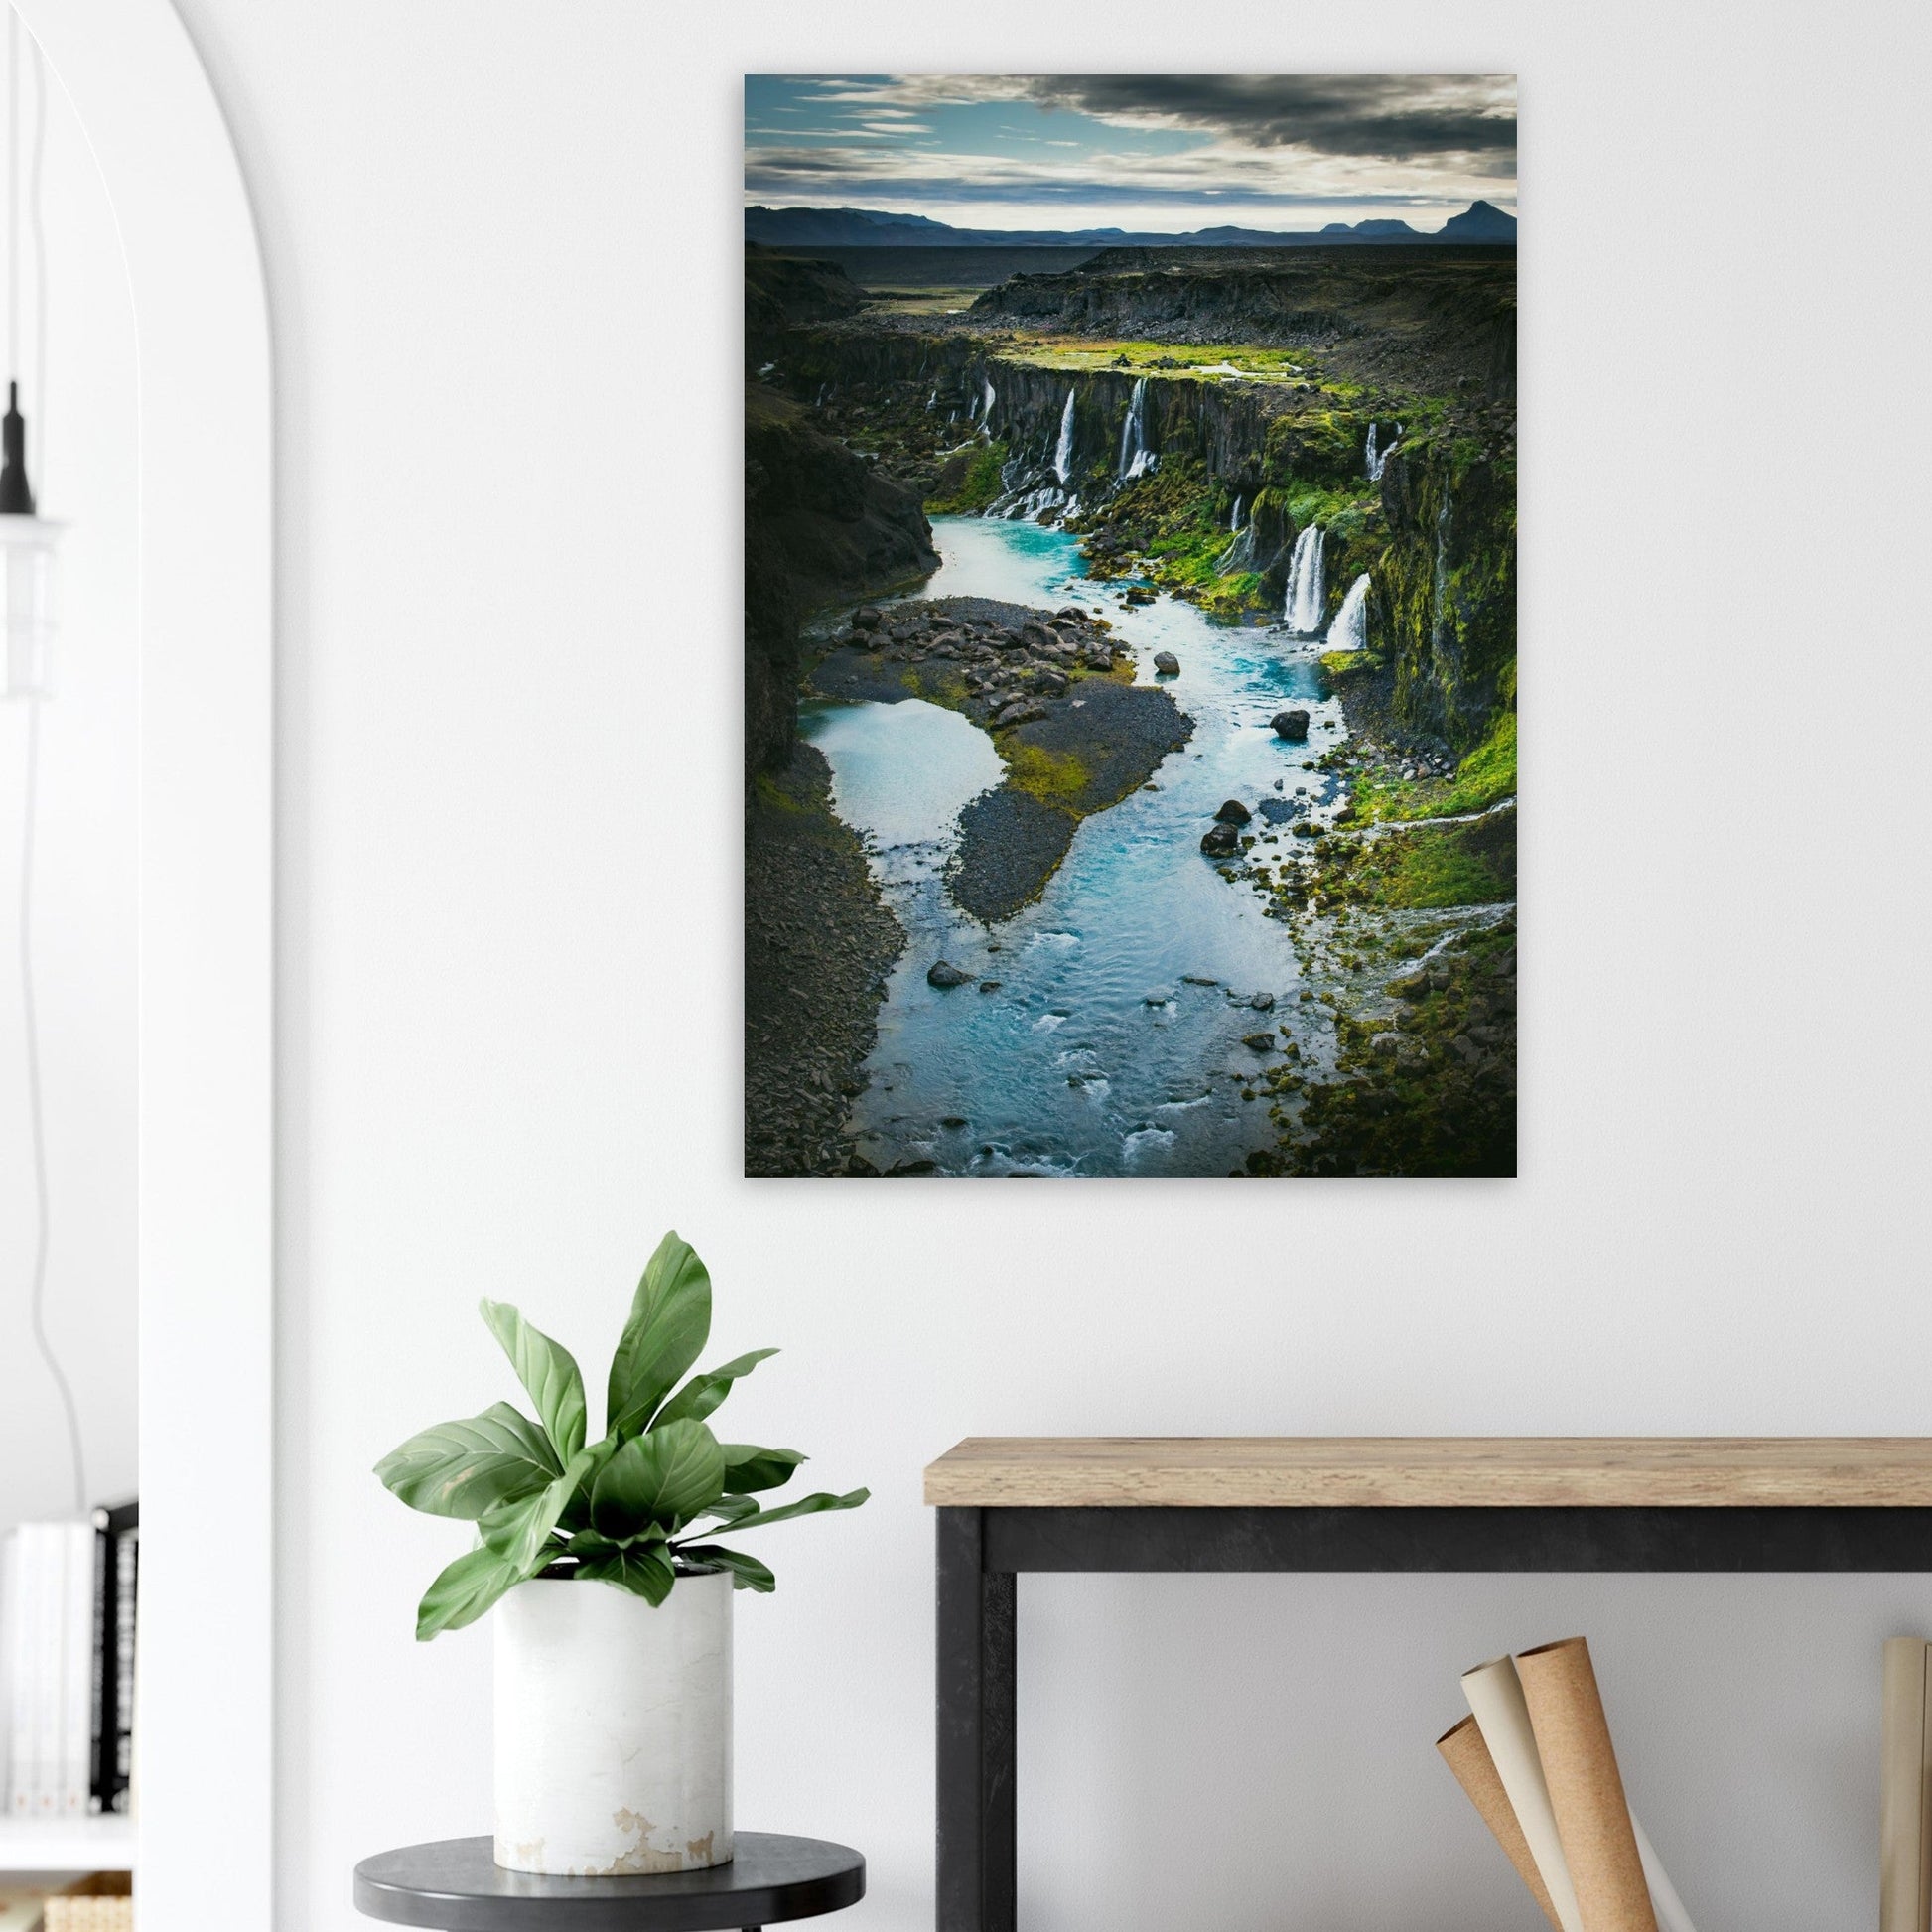 Vente Photo de cascades en Islande - Tableau photo alu montagne